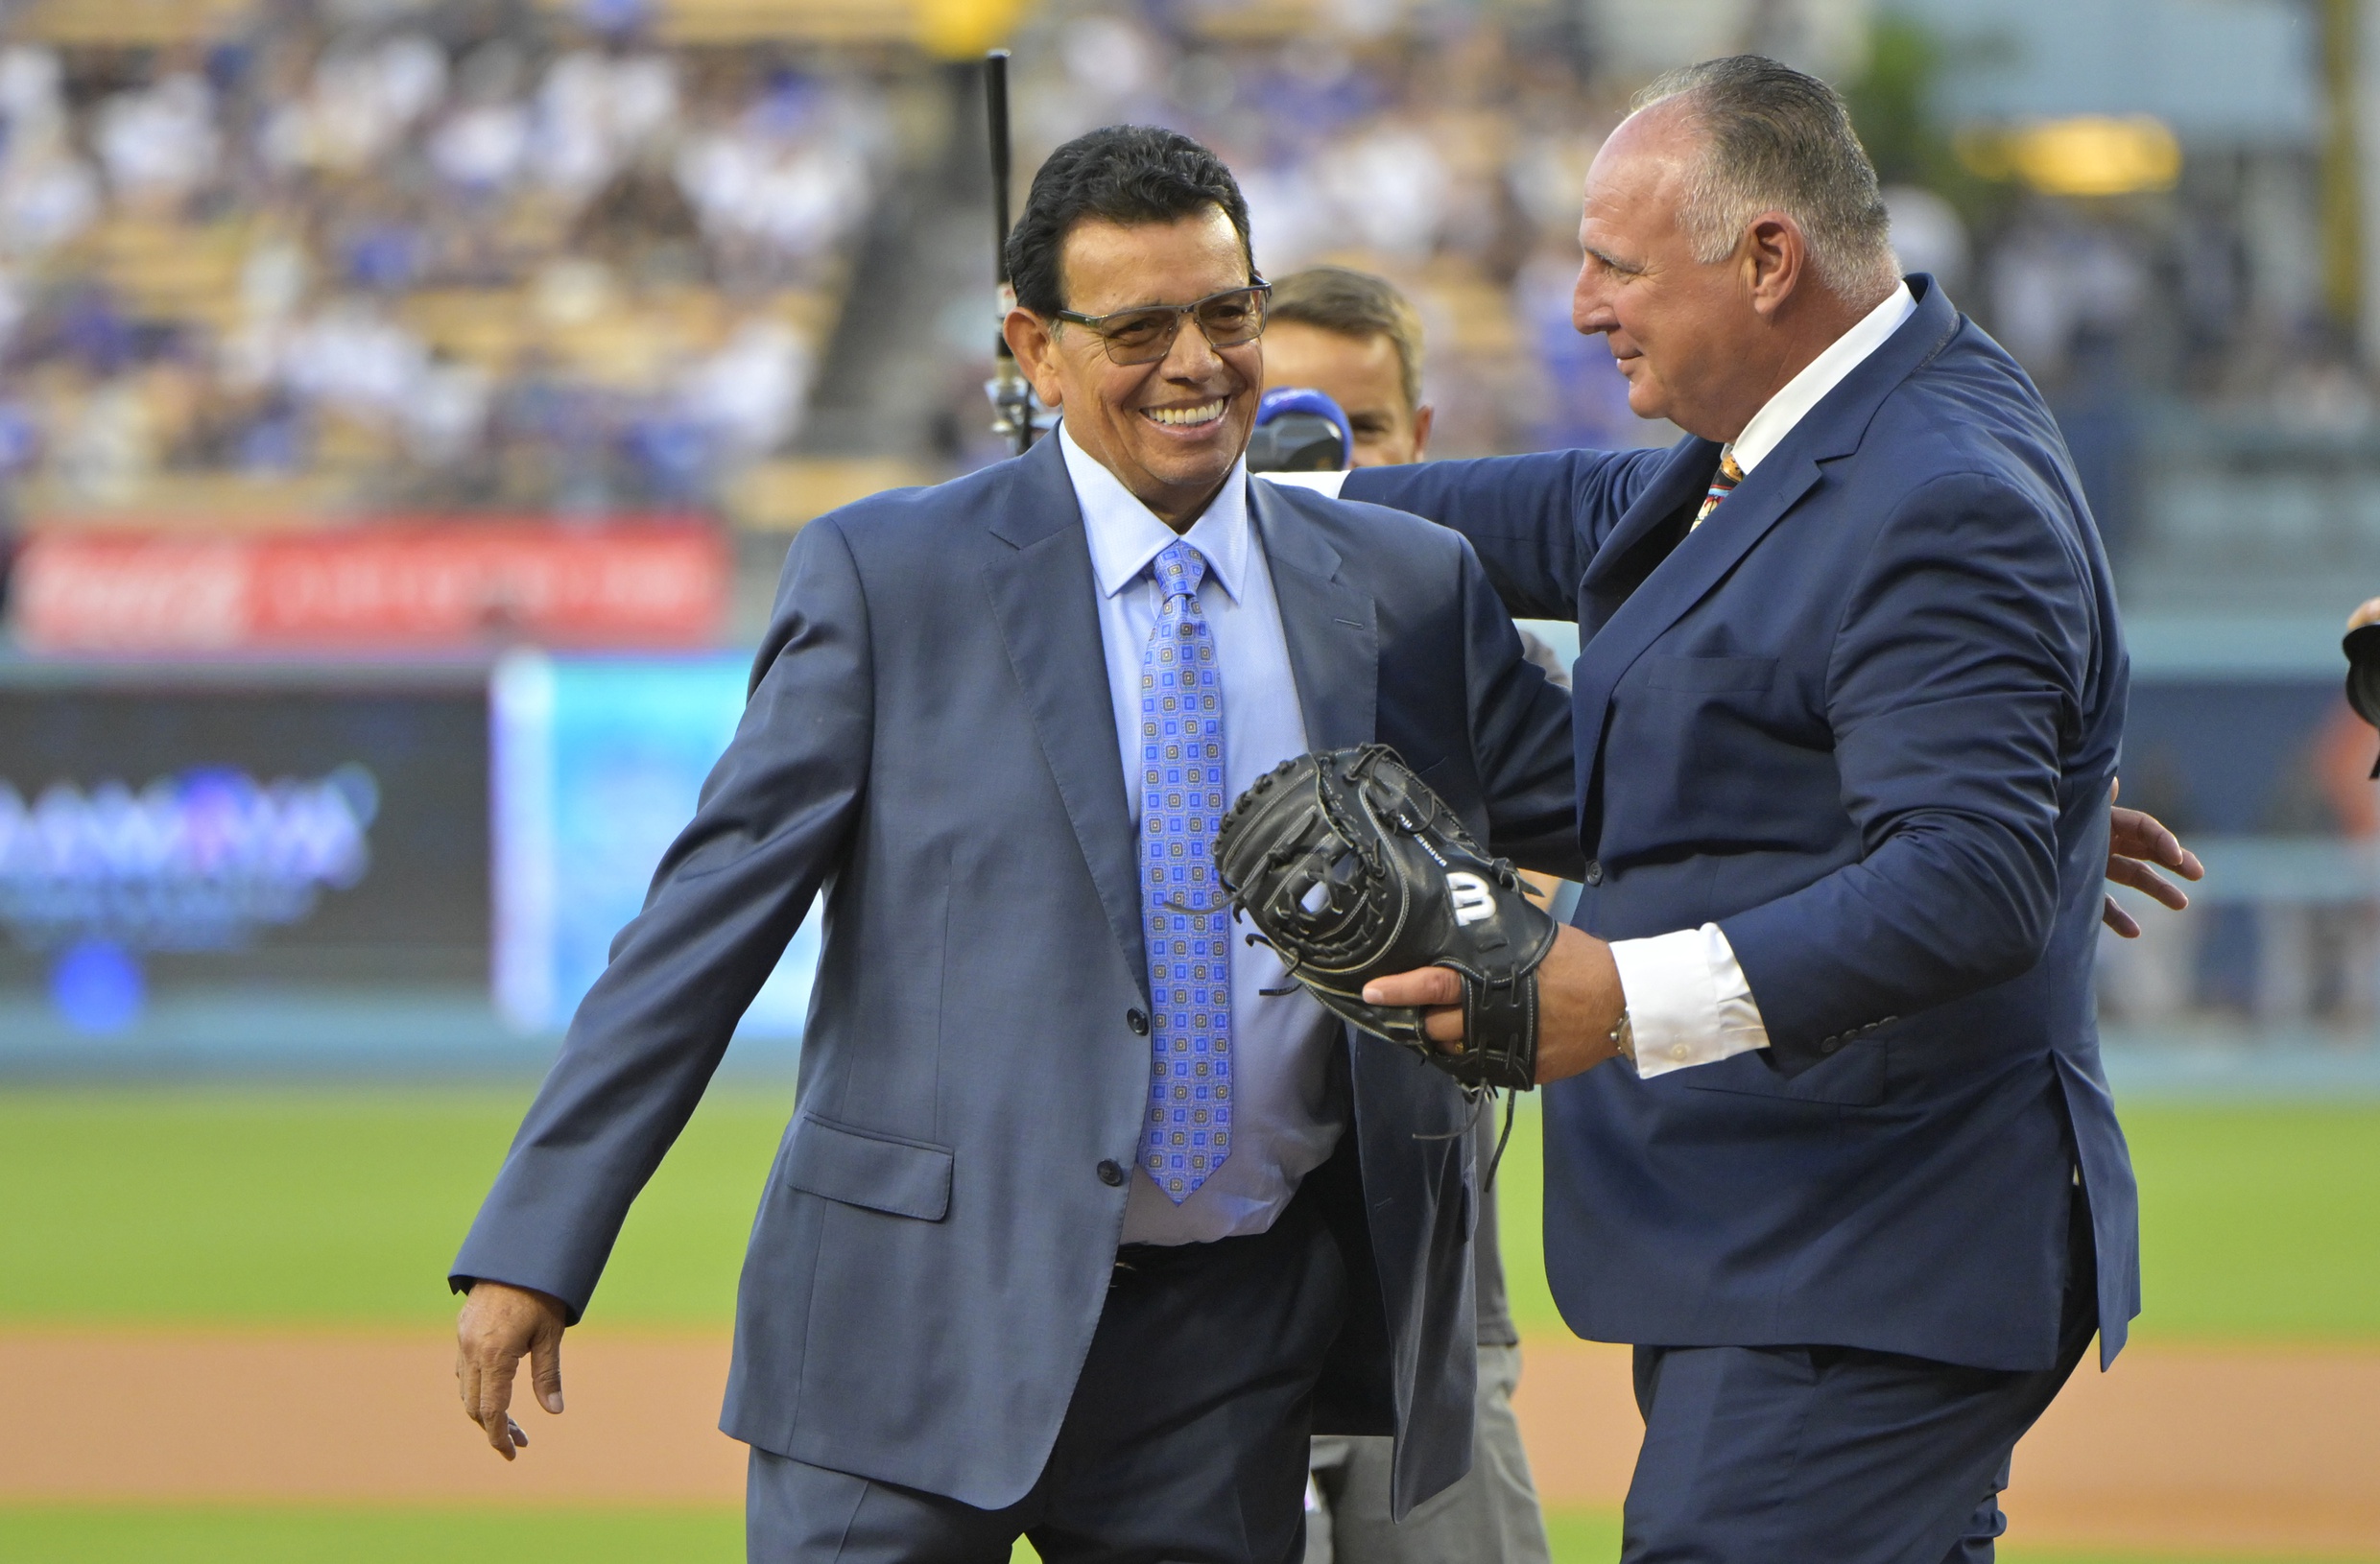 Official fernando Valenzuela august 12,2023 Los Angeles Dodgers